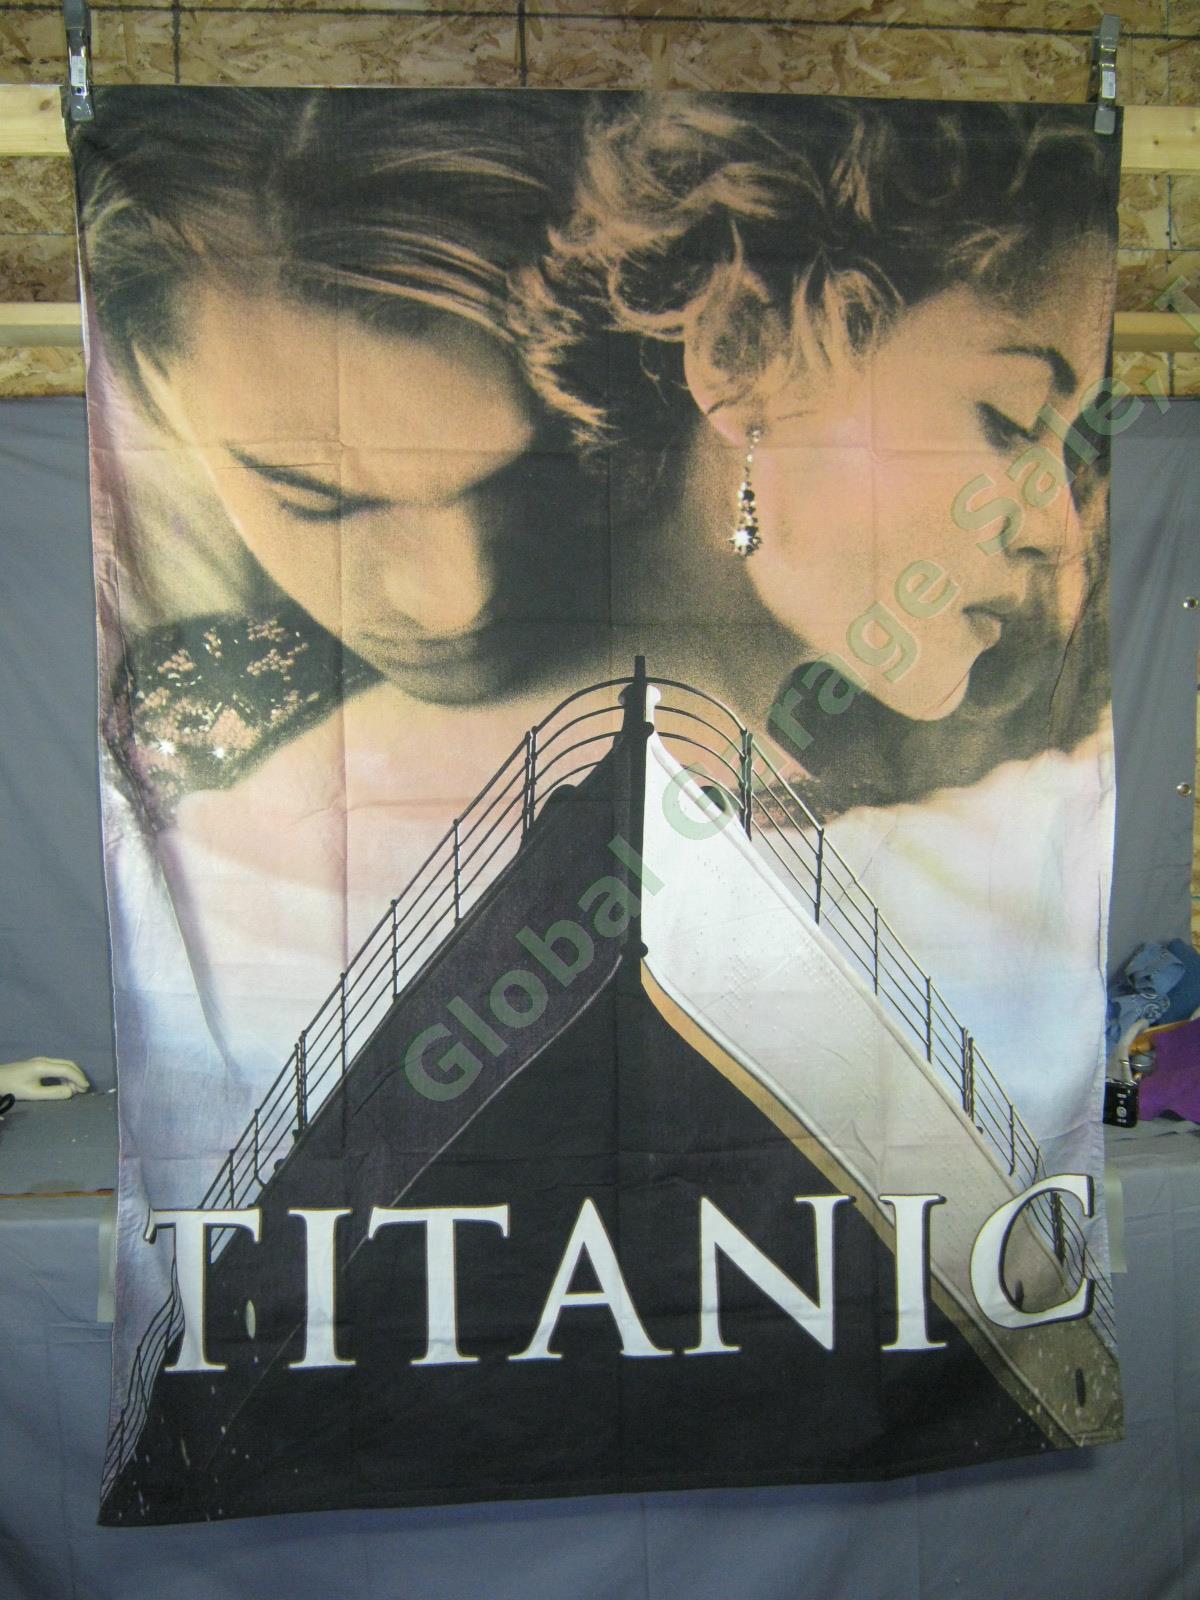 1997 Titanic Movie Theatre Fabric Banner Leonardo DiCaprio Kate Winslet Poster